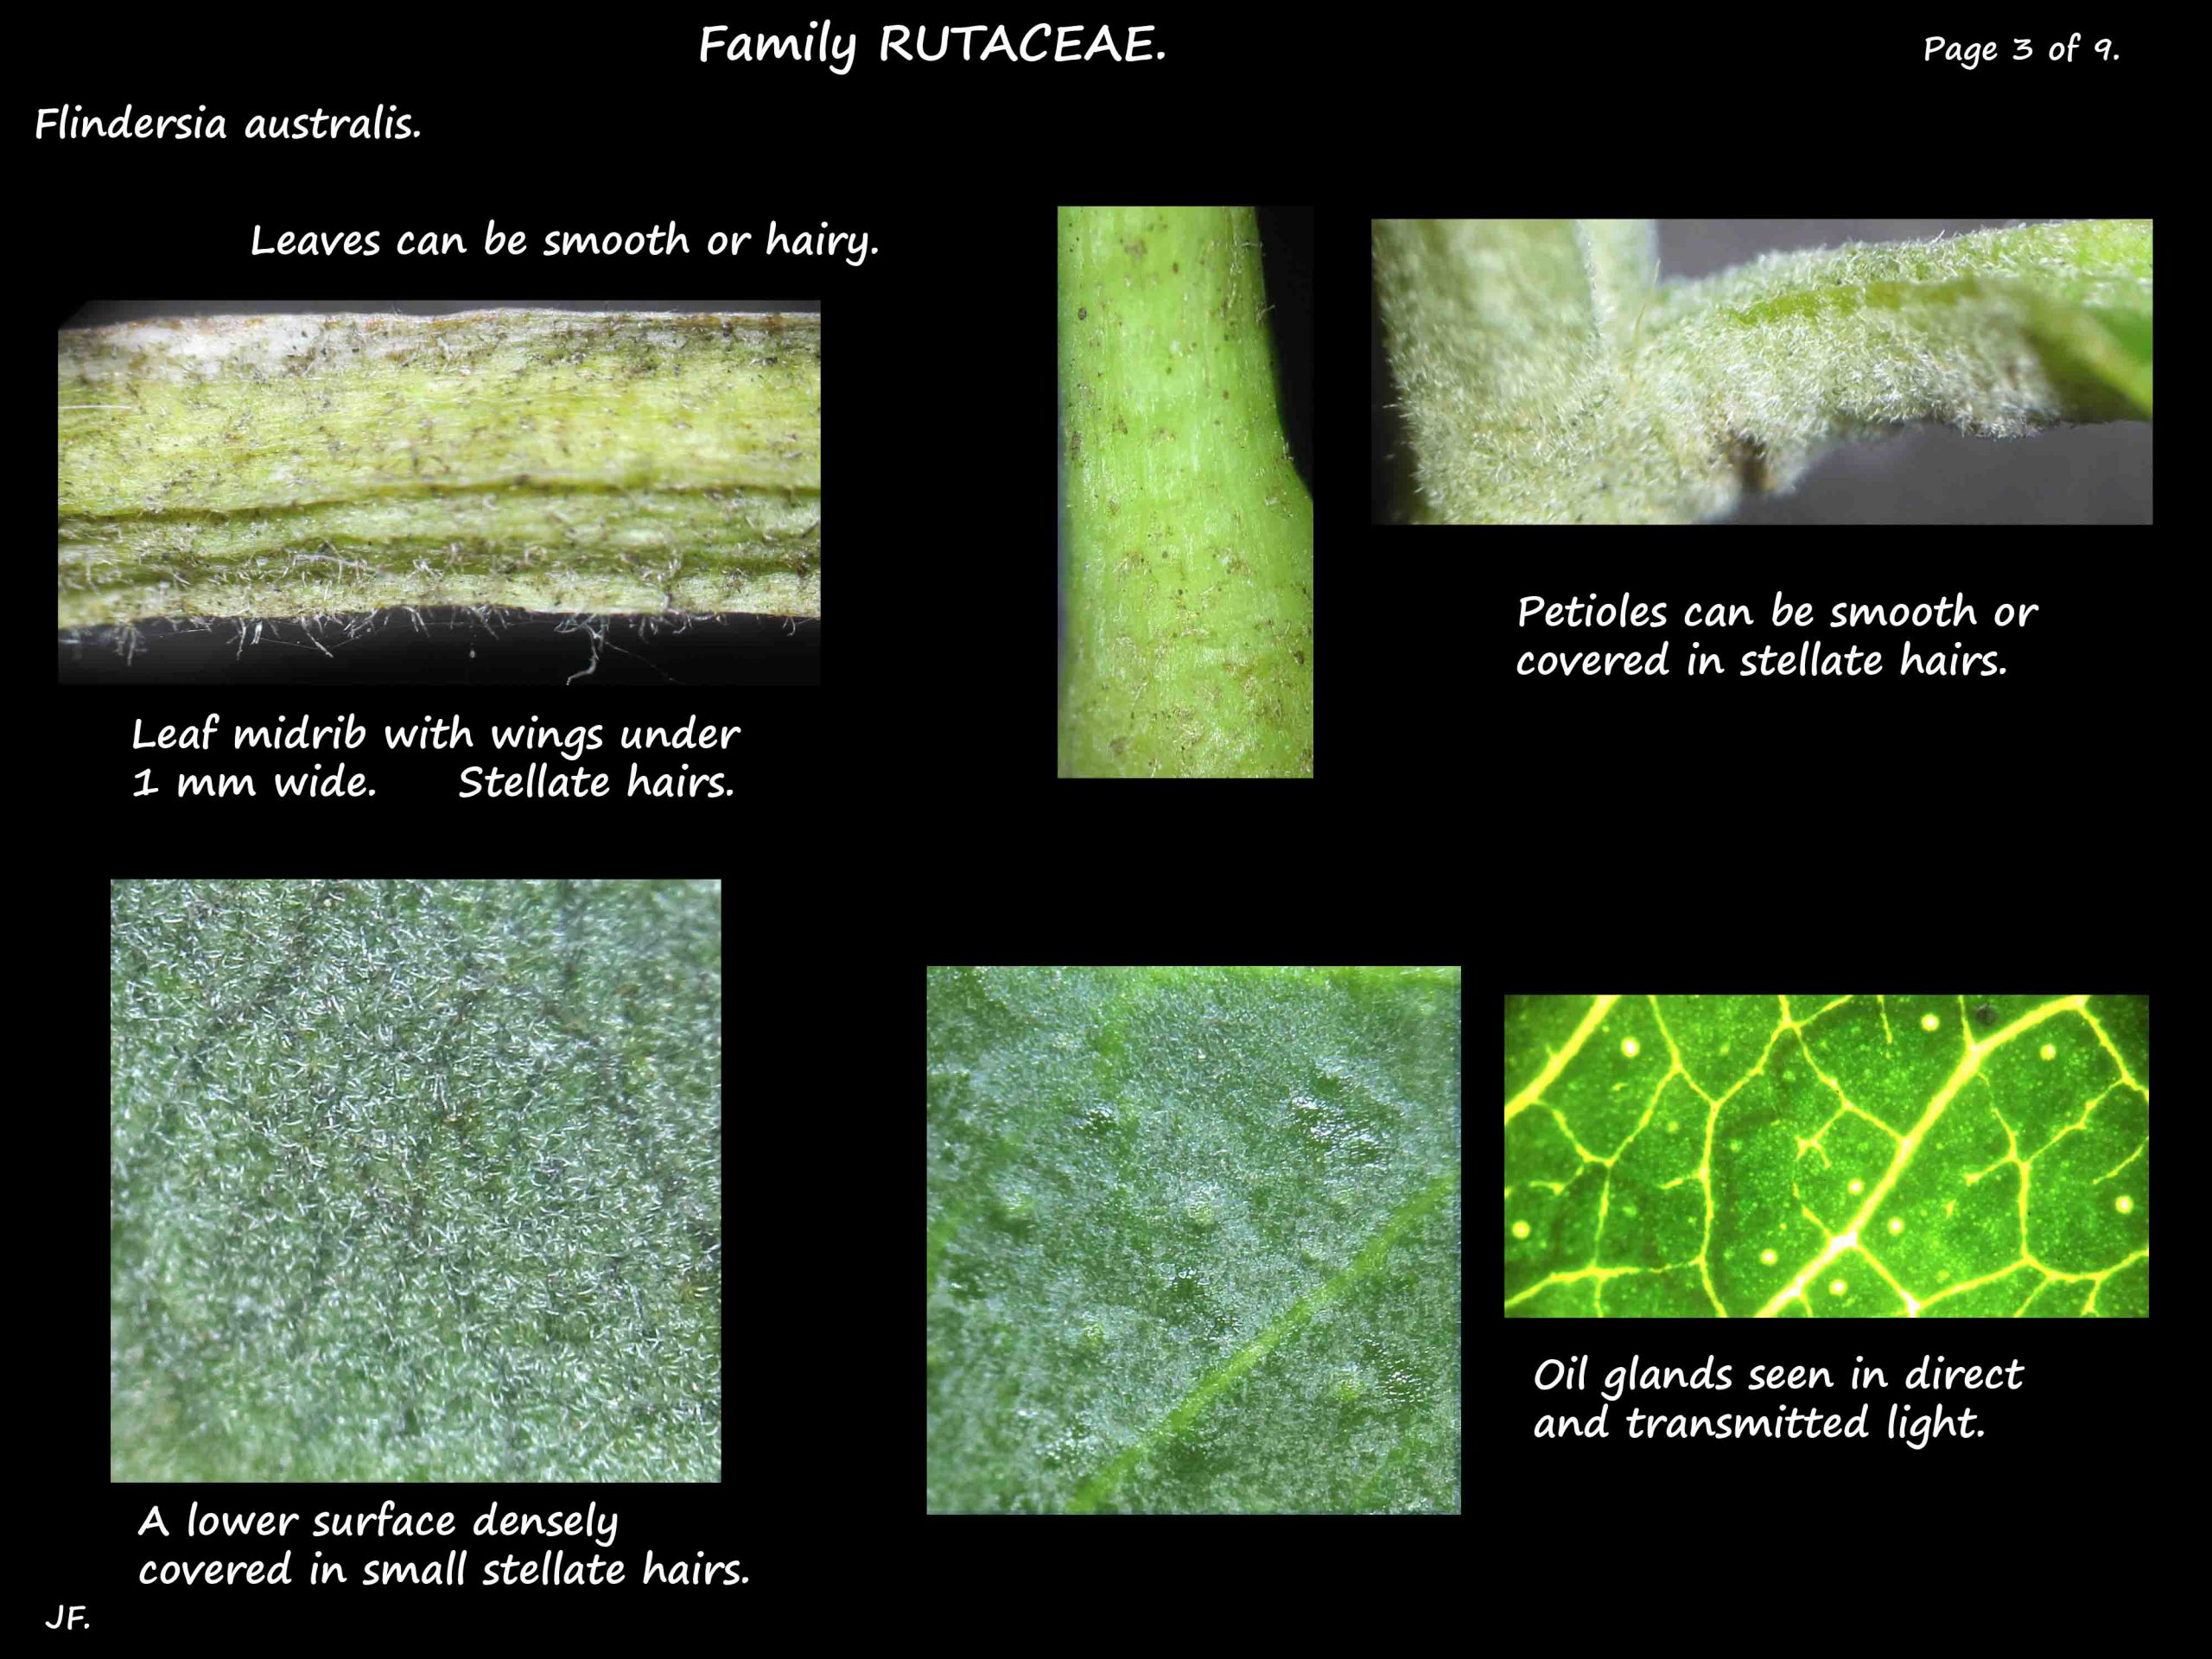 3 Flindersia leaf hairs